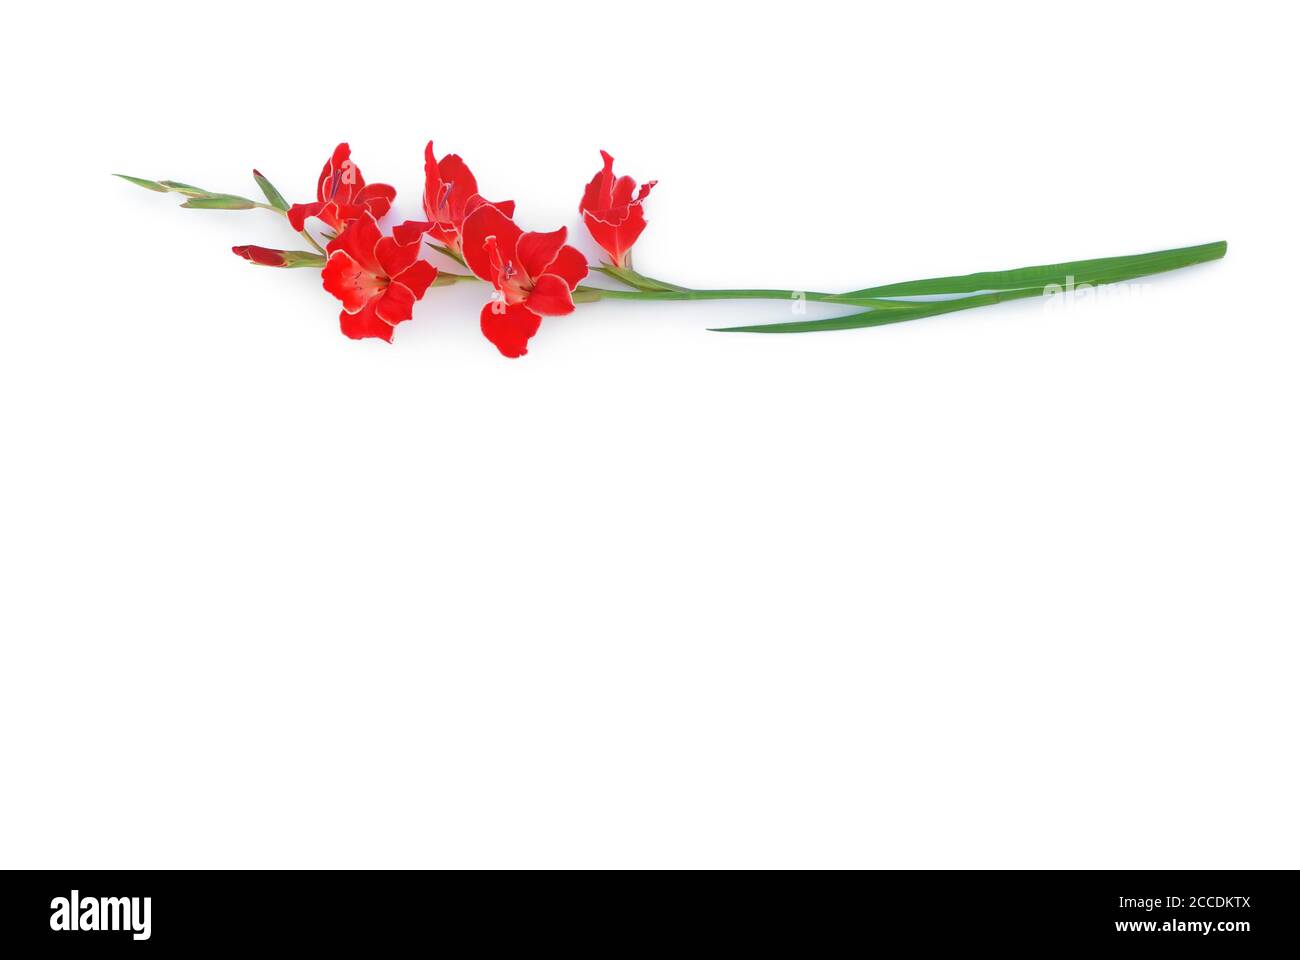 gladiolus lie on white background Stock Photo